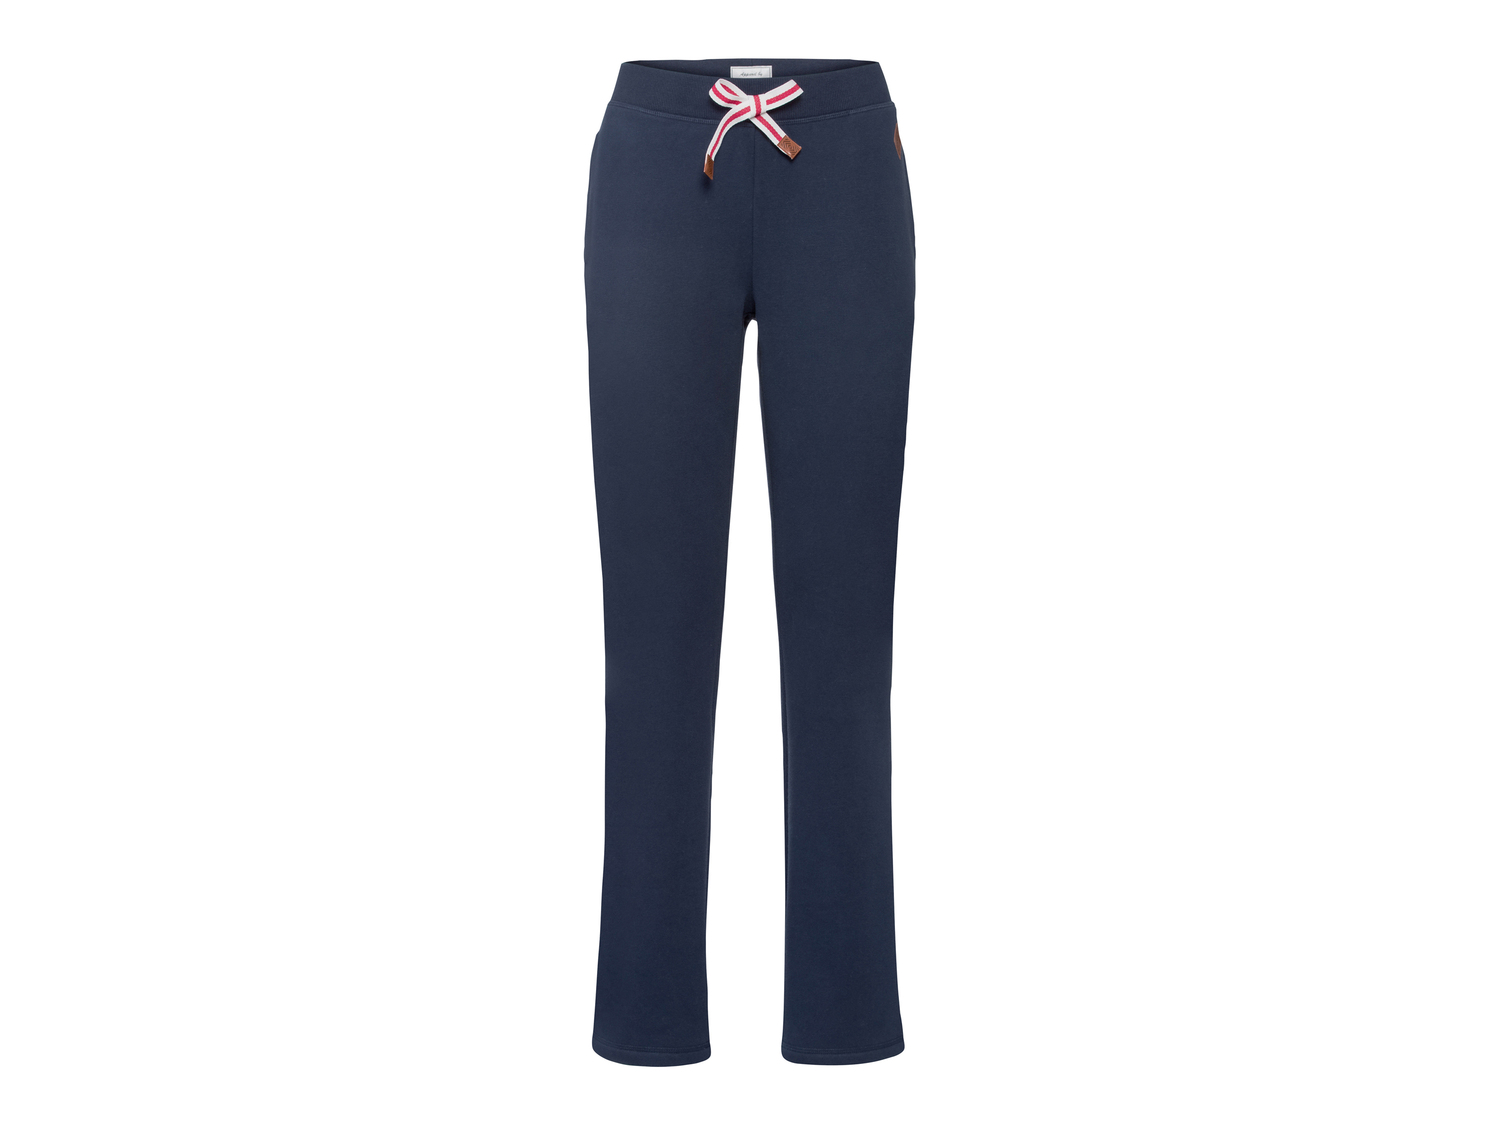 Pantaloni sportivi da donna Esmara, prezzo 11.99 &#8364; 
Misure: S-L
Taglie ...